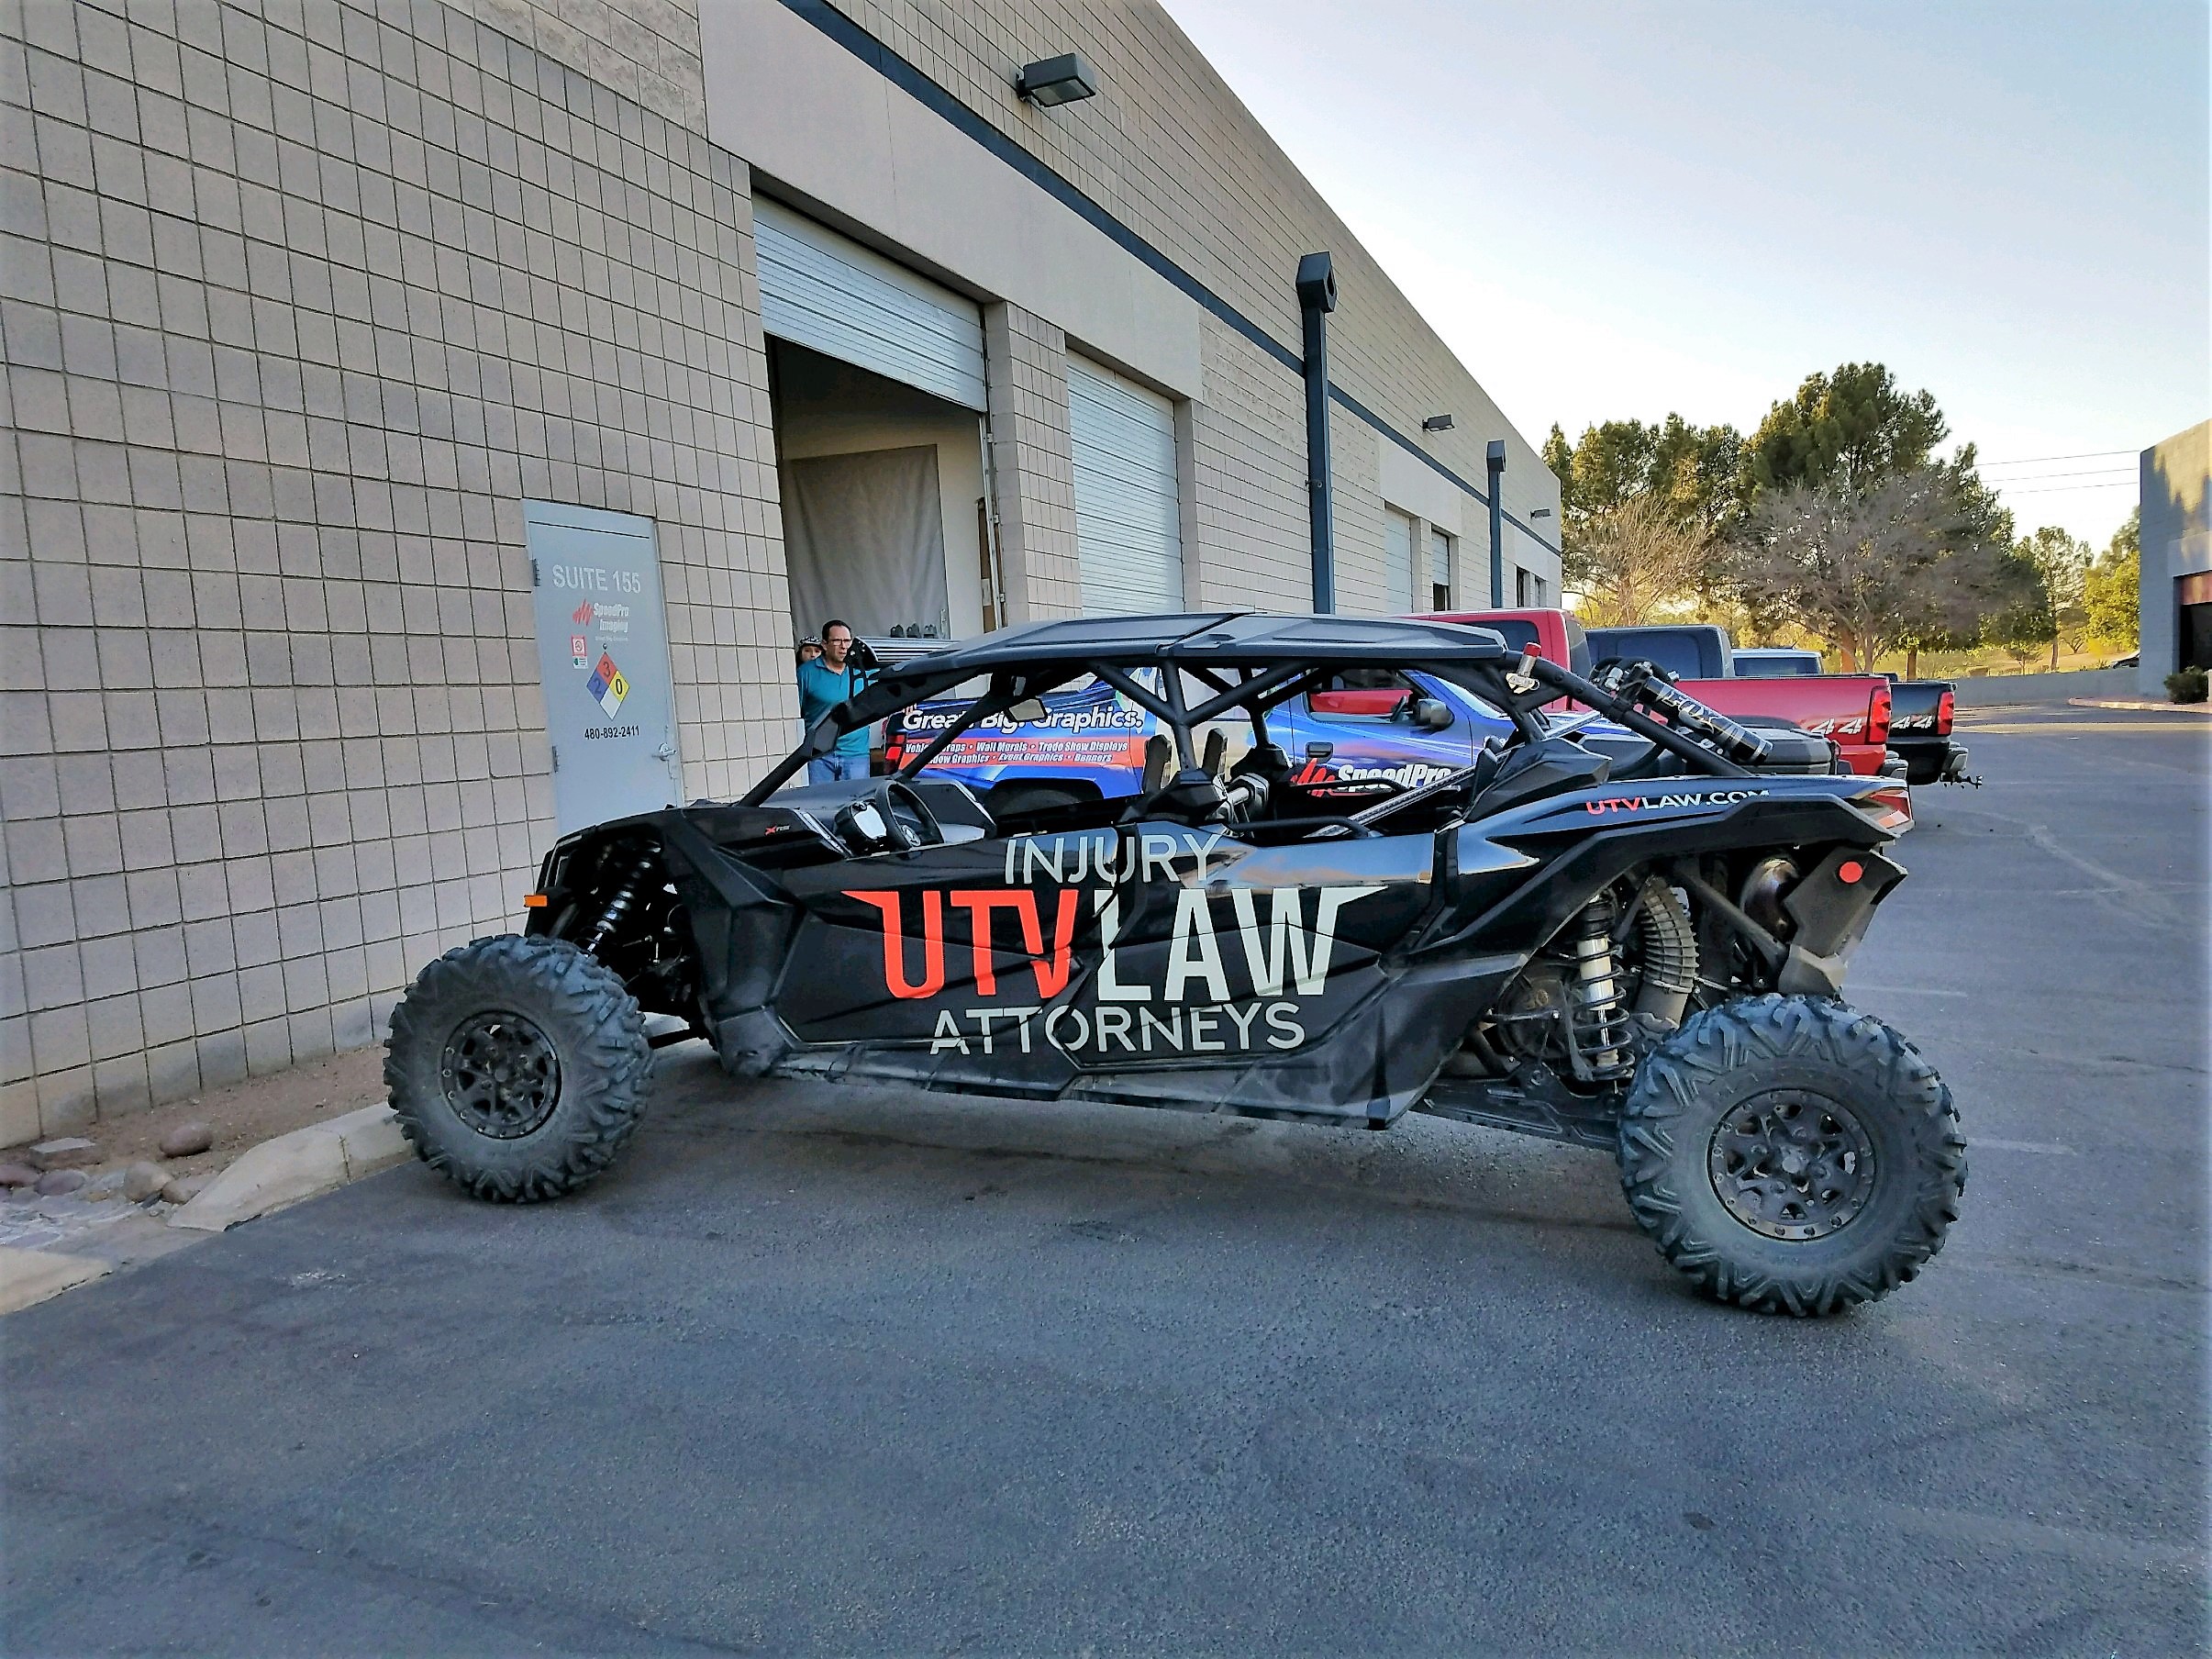 UTV Law Attorneys vehicle wrap